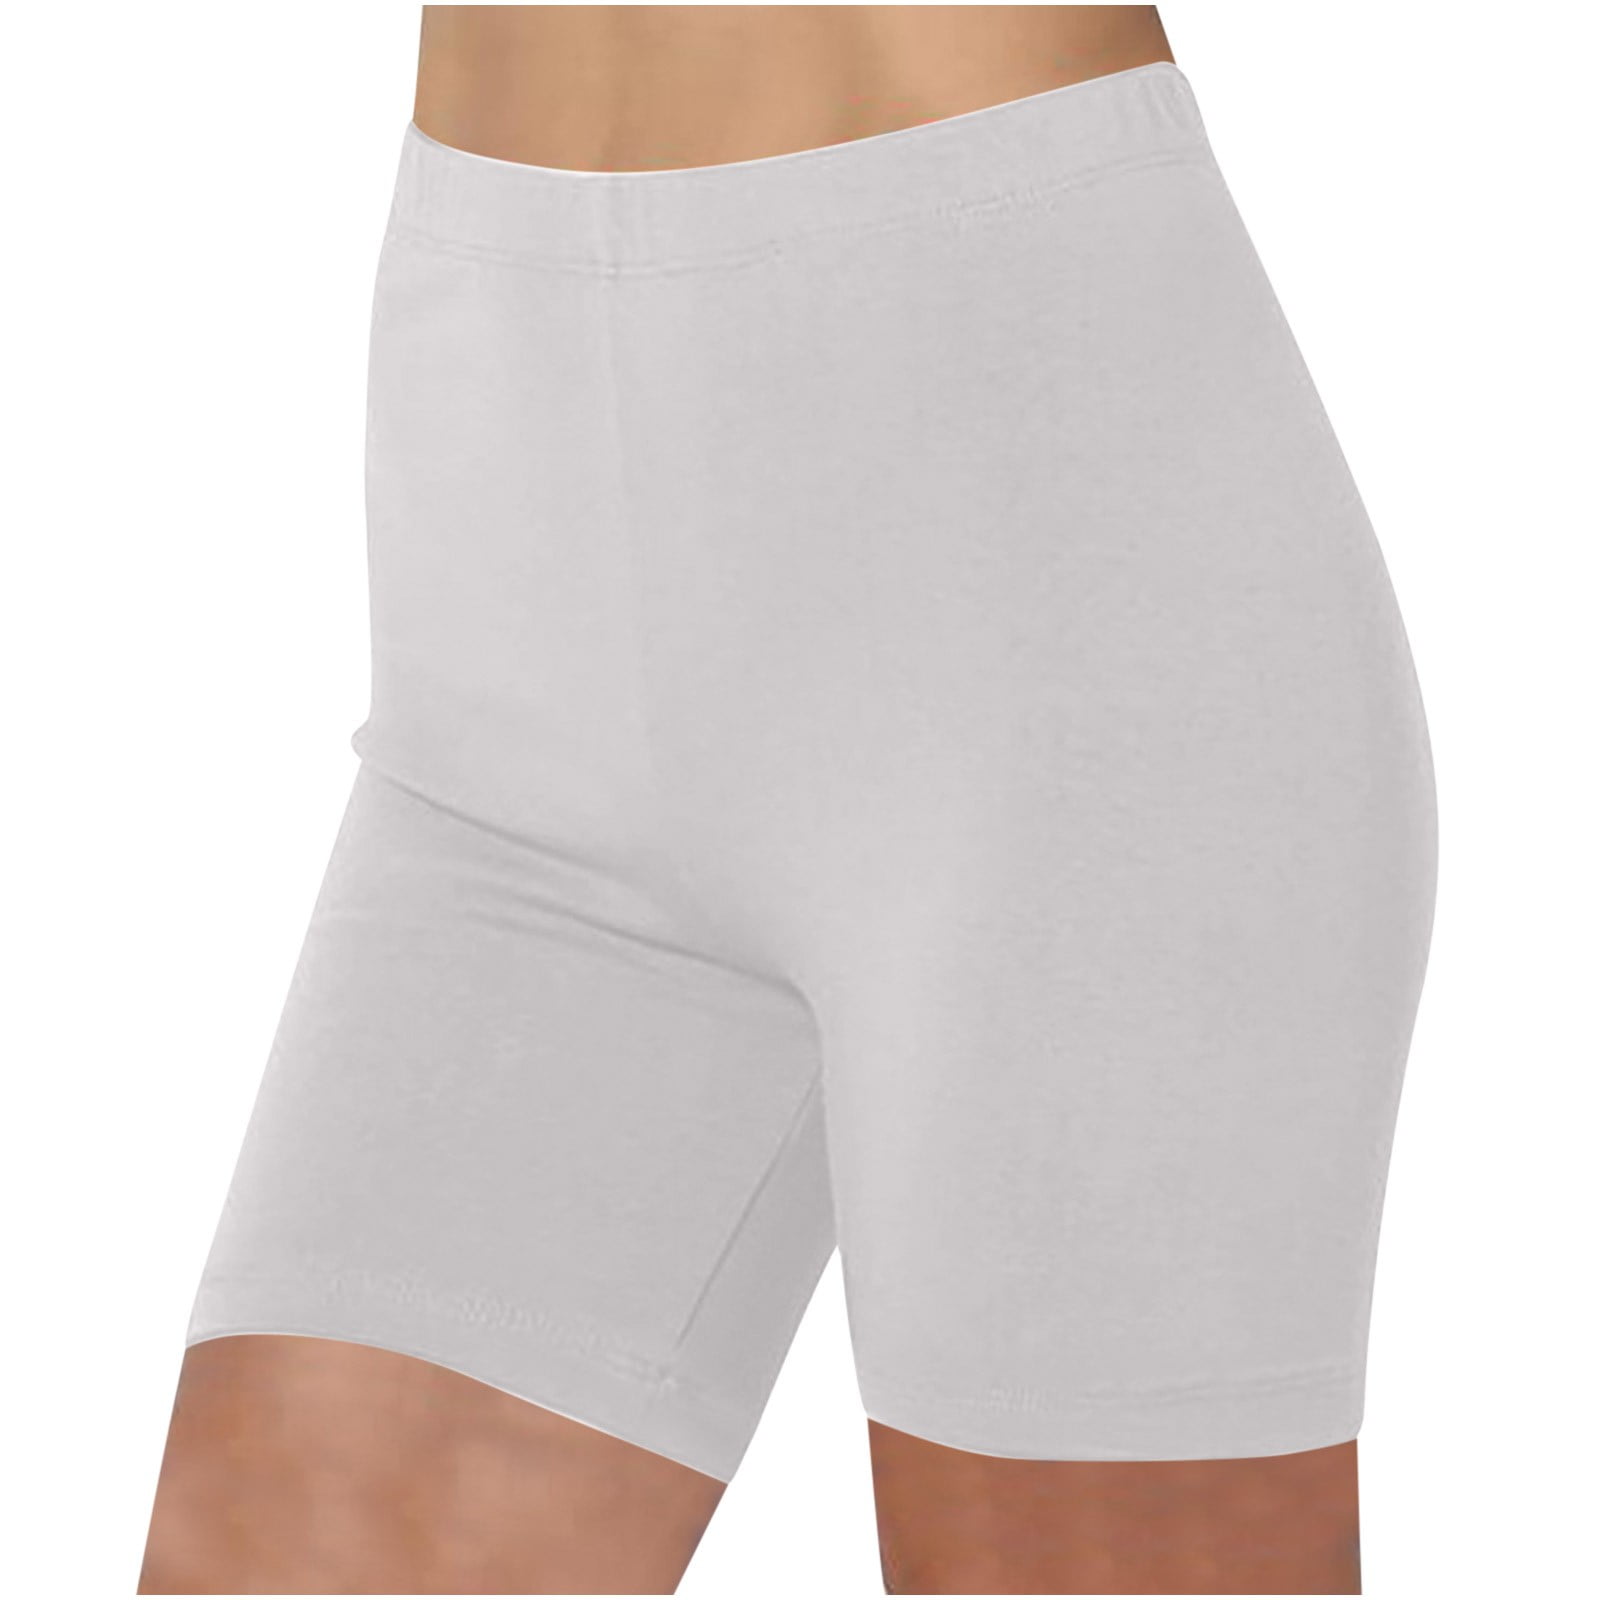 2 Pack Women's Slip Shorts Cotton Underwear, Anti Chafing Safety Boy Shorts  Panties Under Dress, Yoga